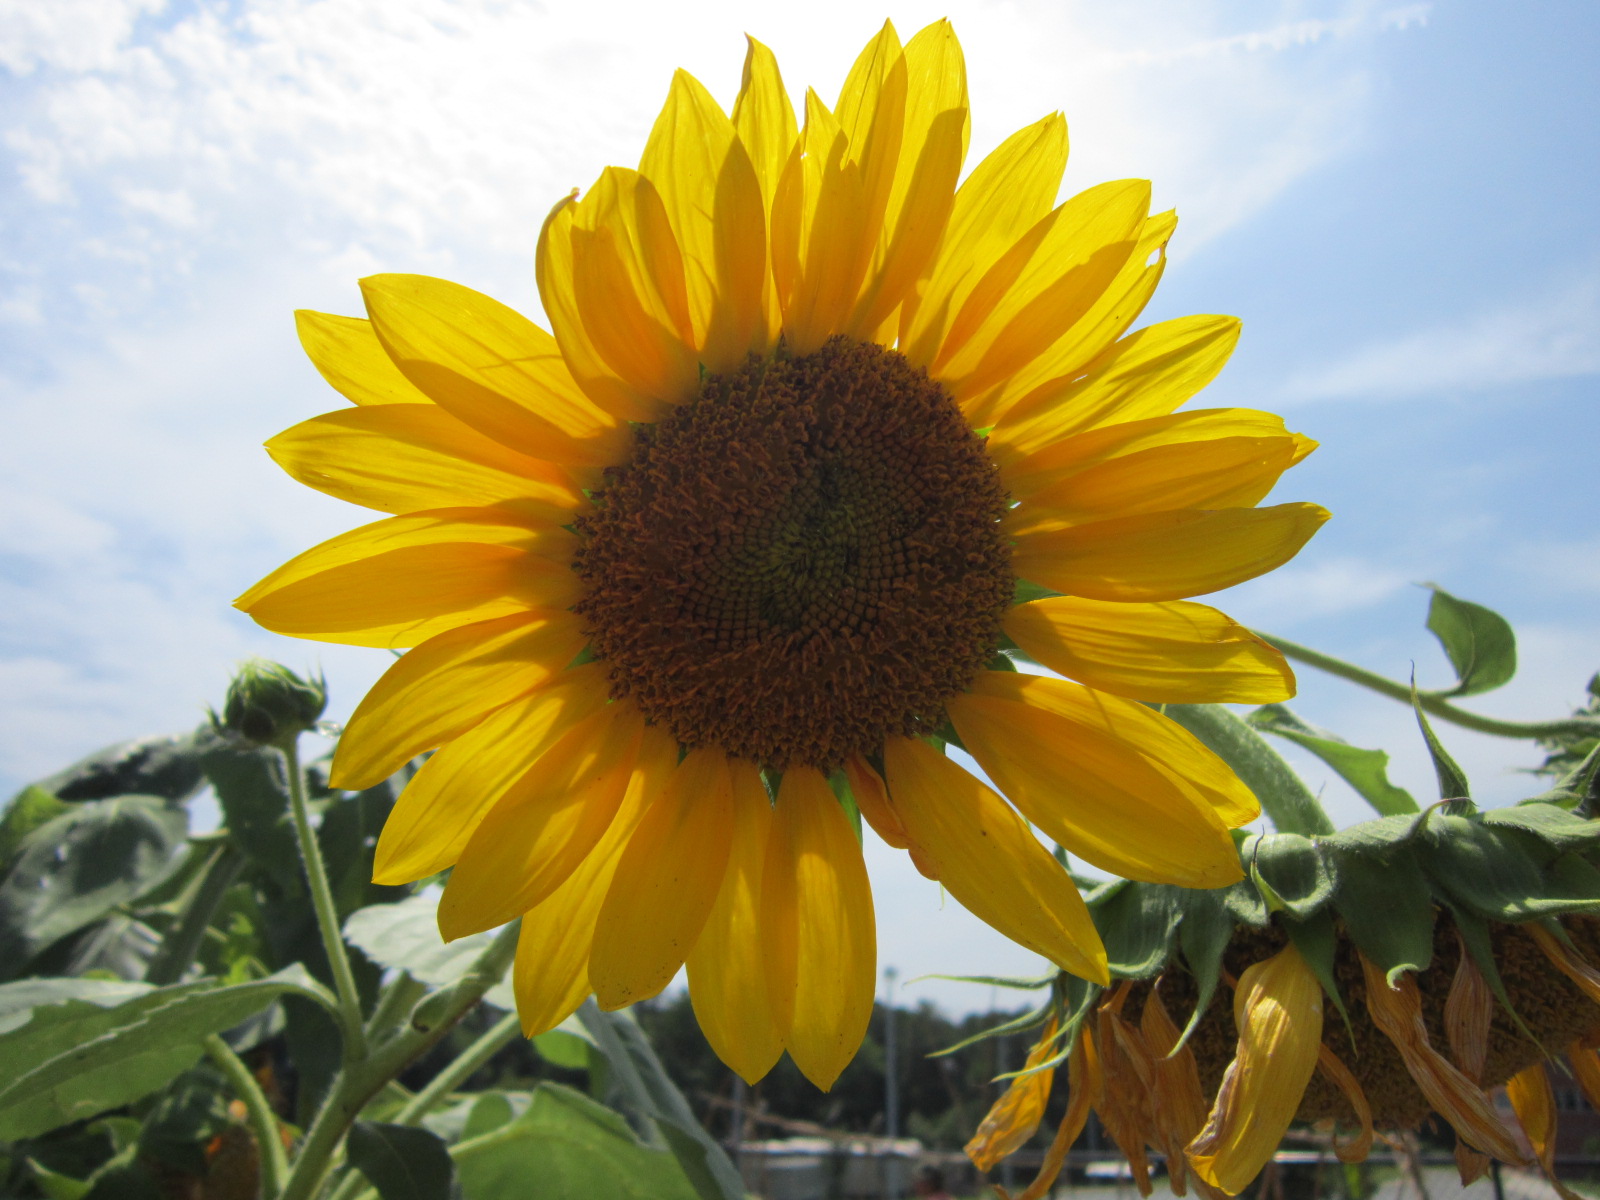 Welcoming Sunflowers!